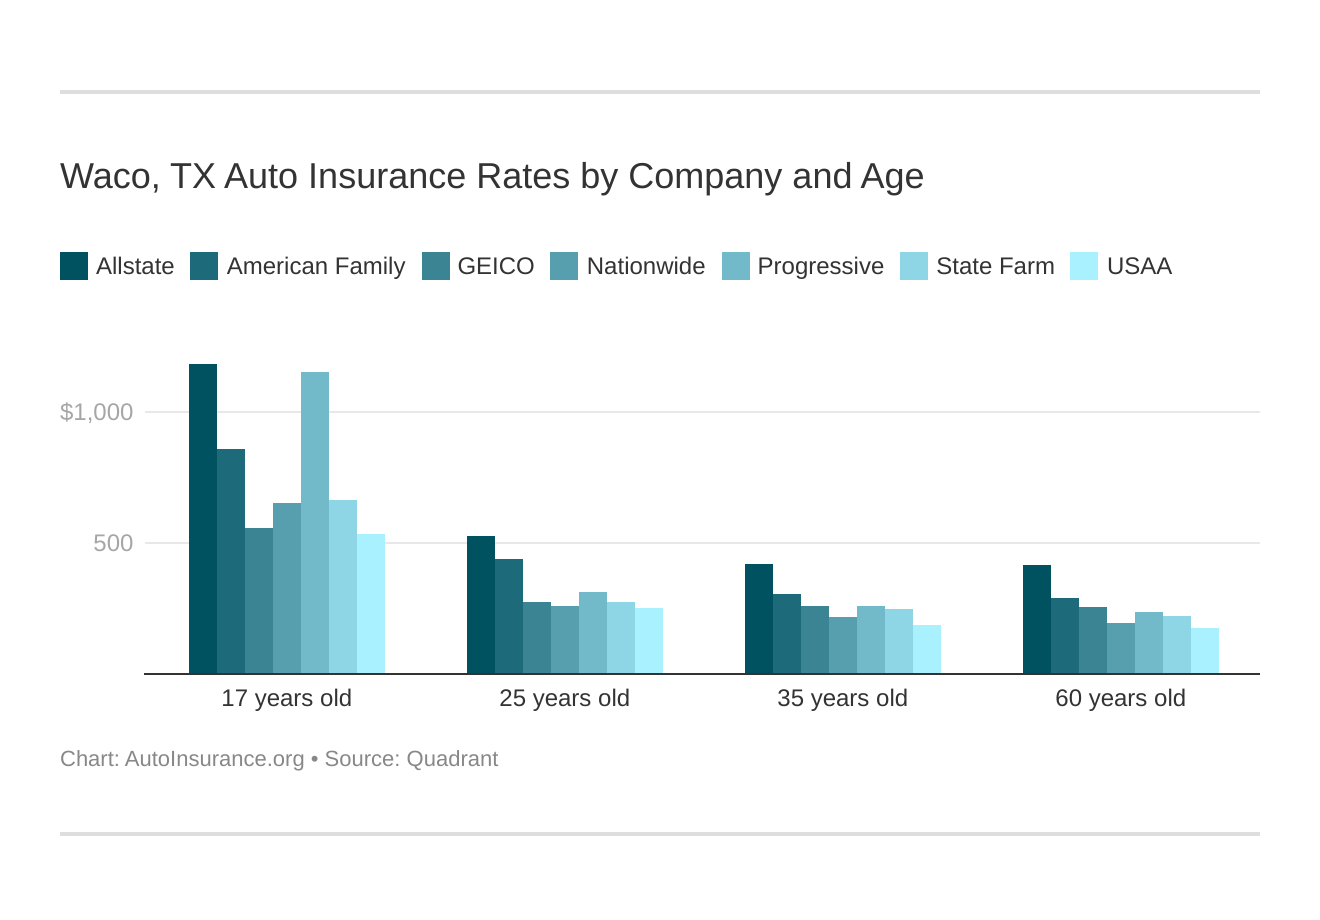 Waco, TX Auto Insurance Rates by Company and Age